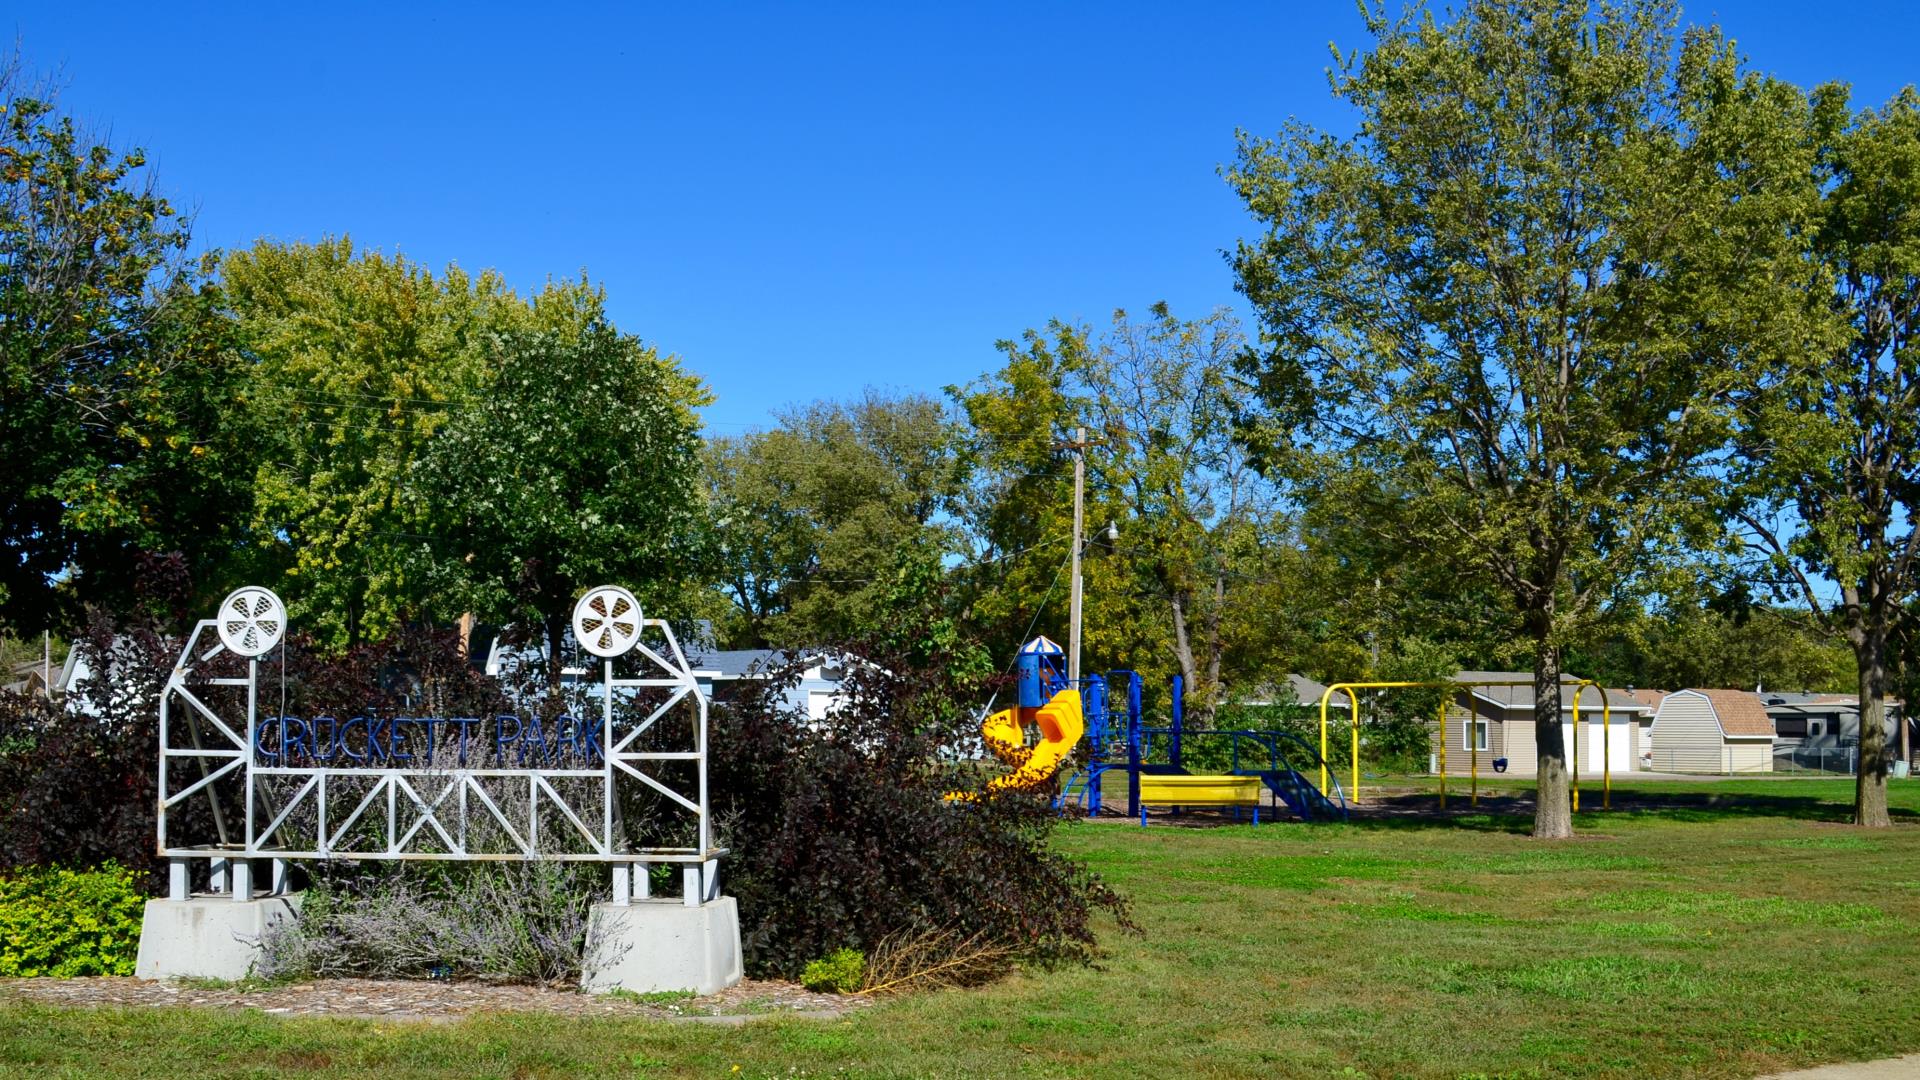 Crockett Park sign and play area